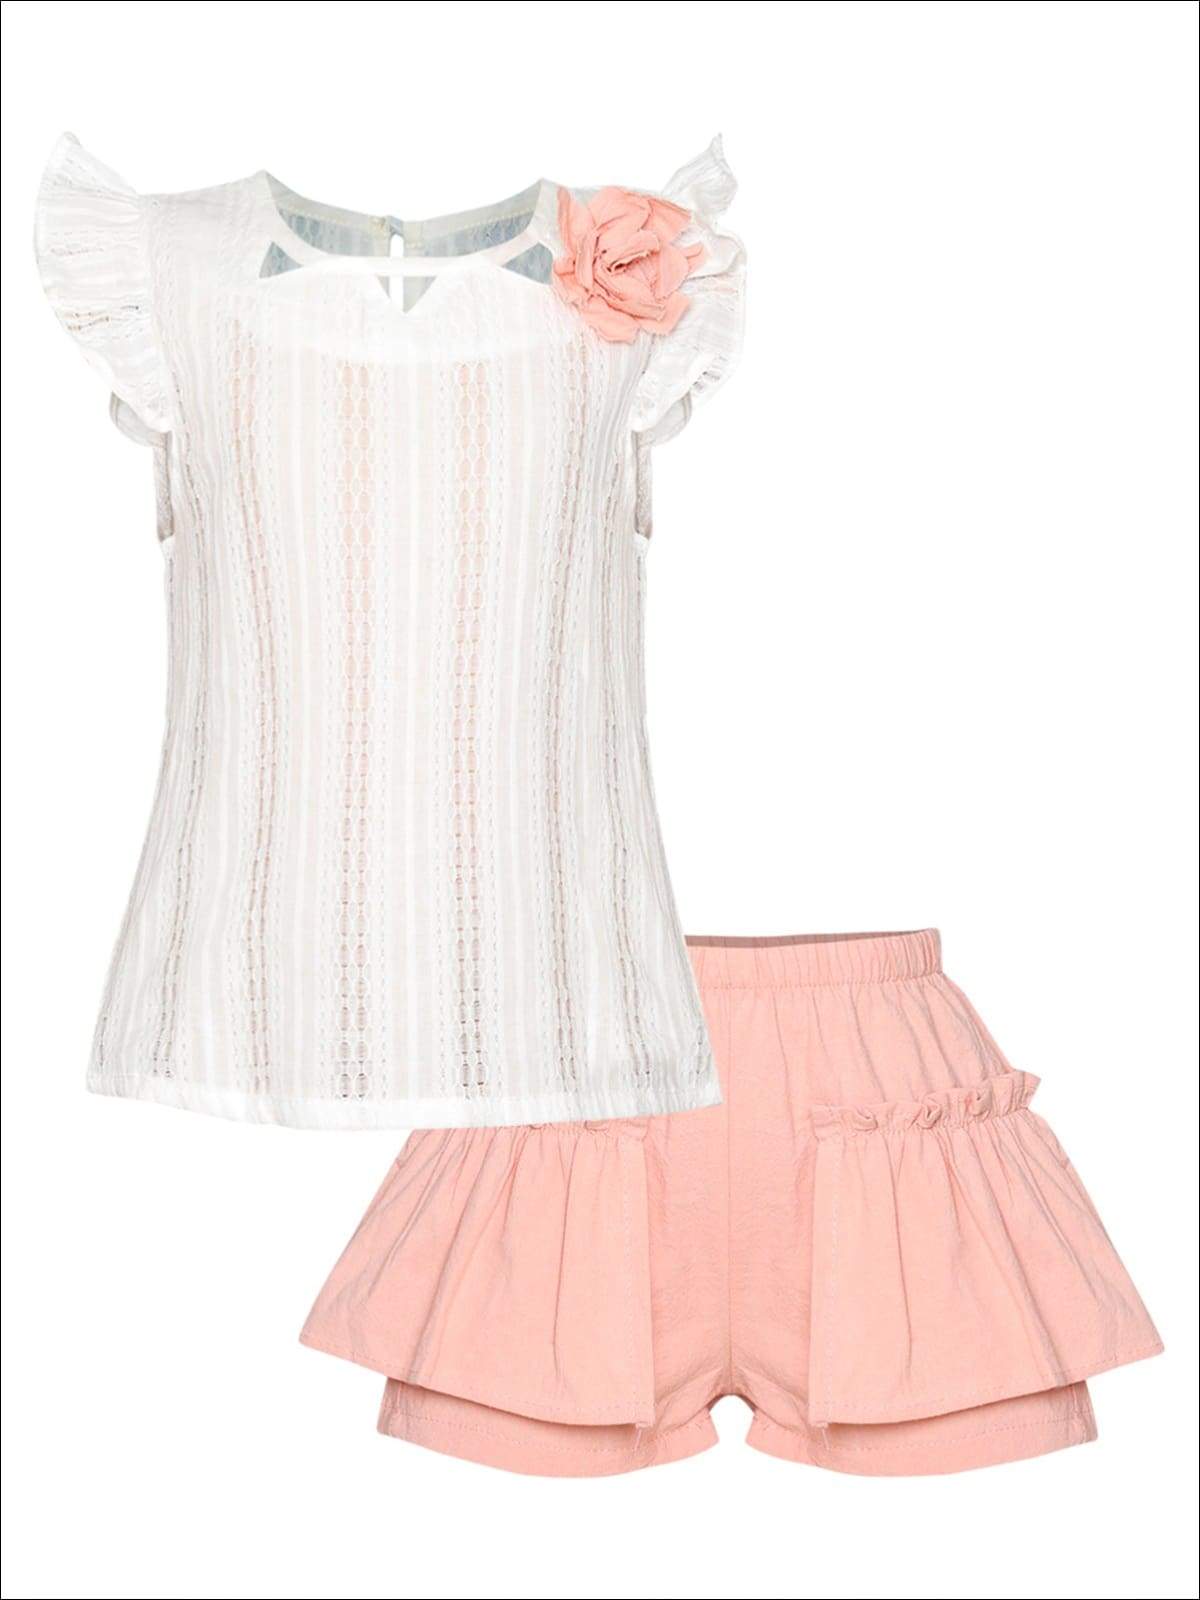 Girls Spring Ruffled Sleeve Blouse & Shorts Set - Pink / 2T - Girls Spring Casual Set